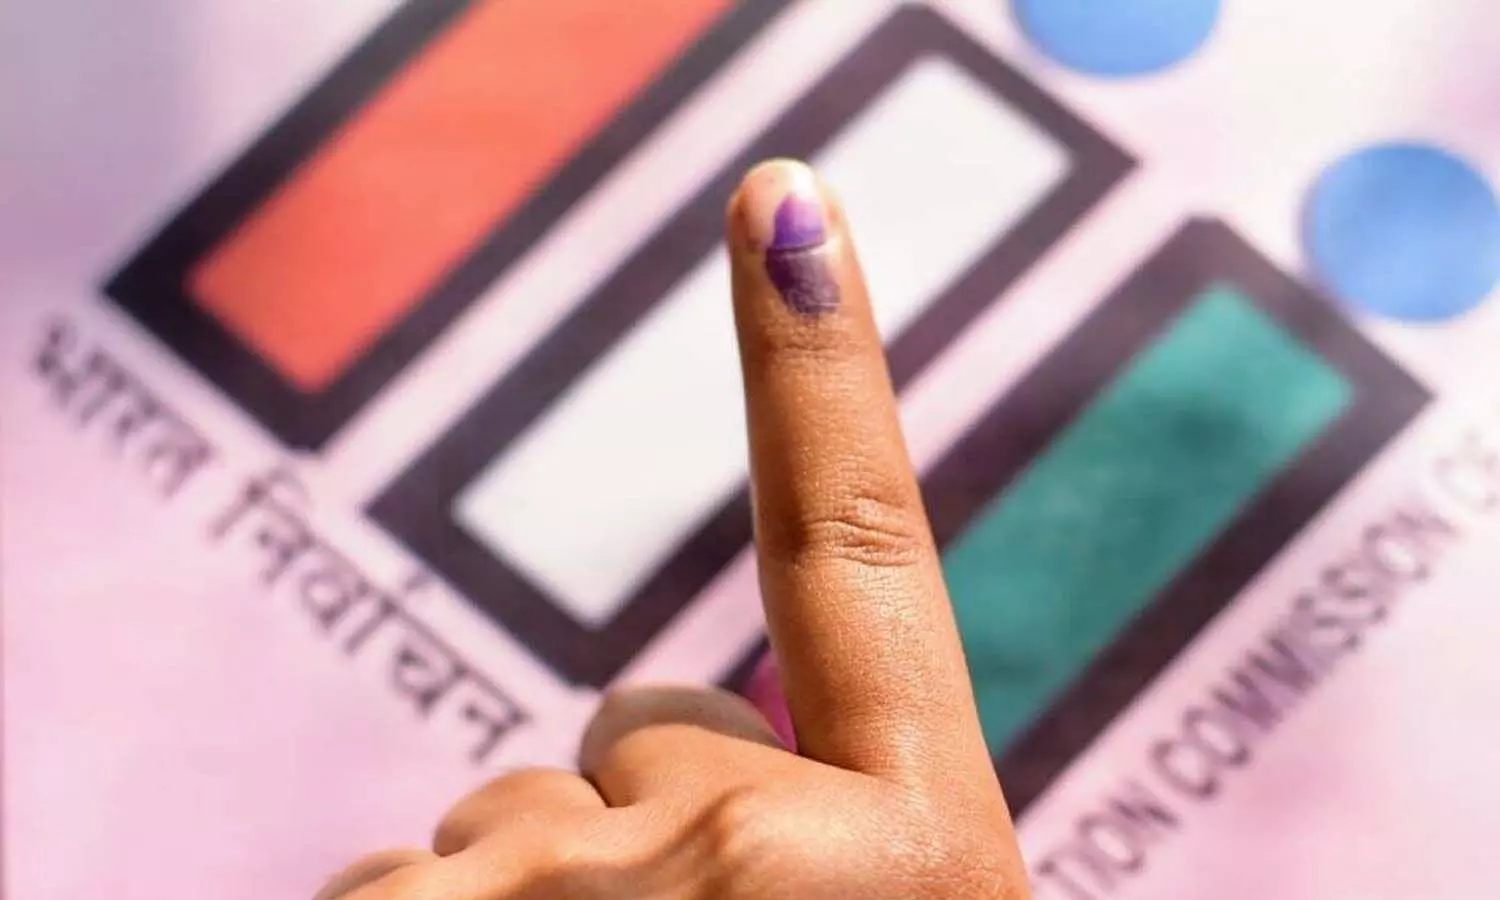 UP Election 2022 Phase 2: Uttar Pradesh witnesses 51.93% voter turnout till 3 pm